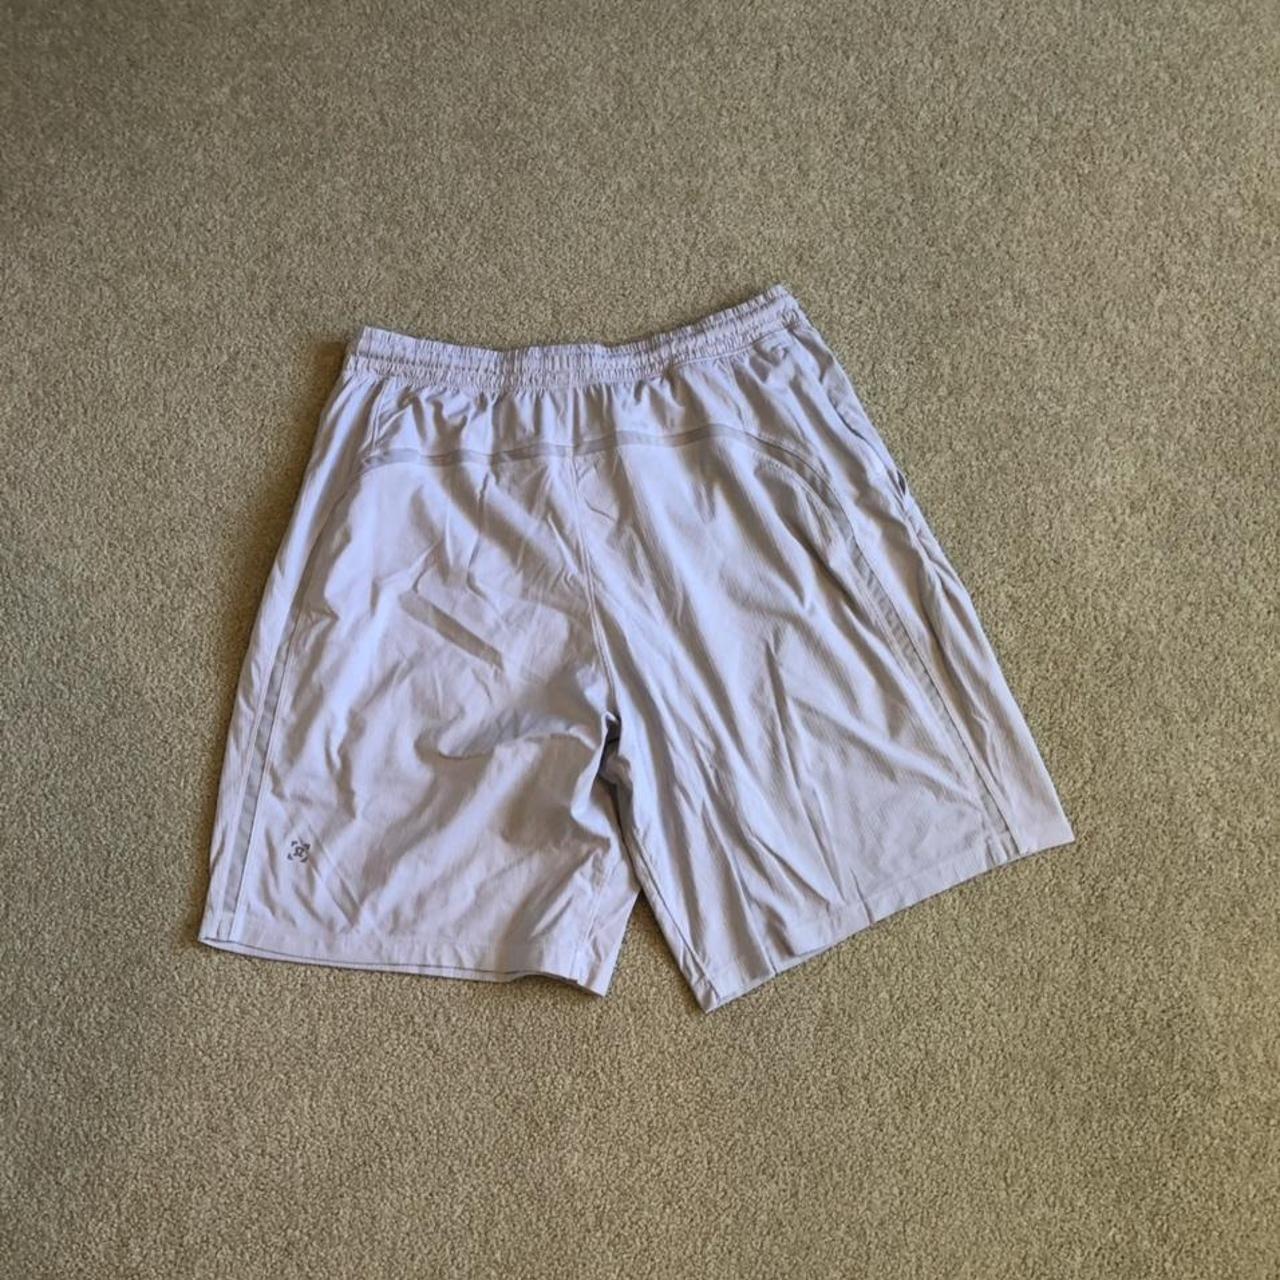 Lululemon Surge Shorts. Men's Large. Check - Depop